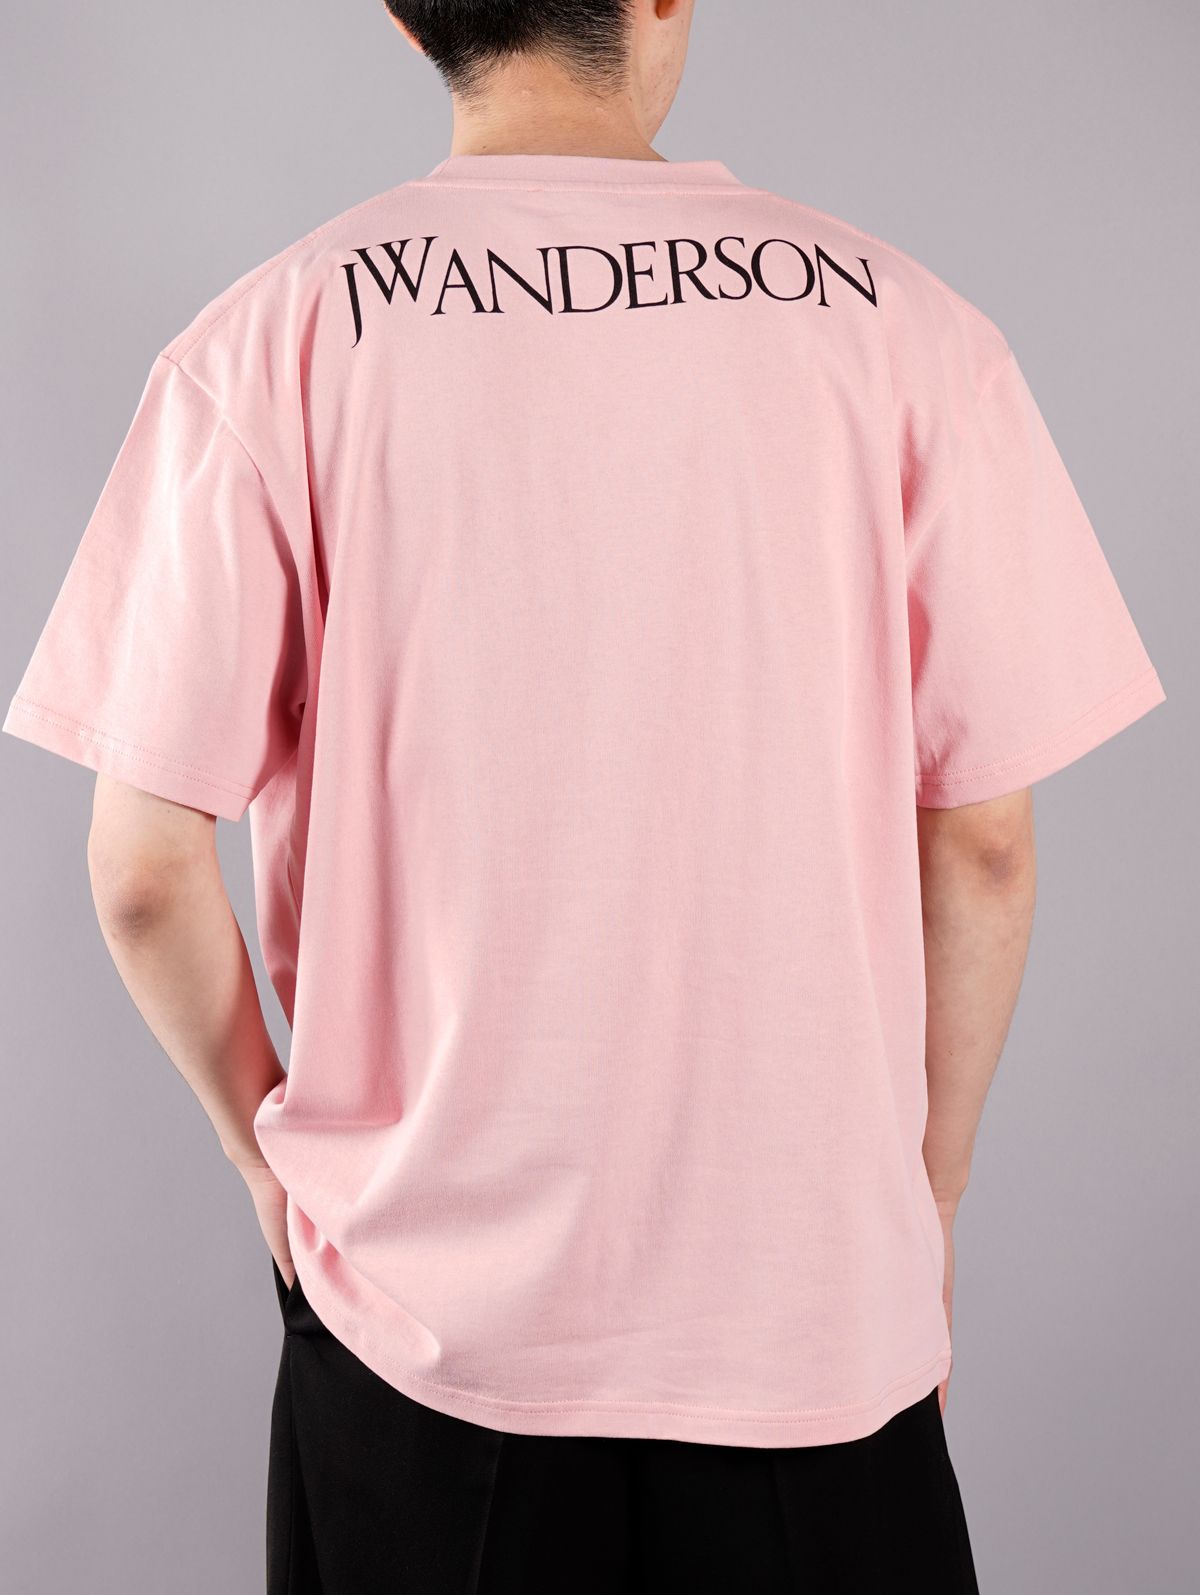 OVERSIZED PRINTED FACE T-SHIRT / オーバーサイズド プリンテッド フェイス Tシャツ (ピンク) - XS